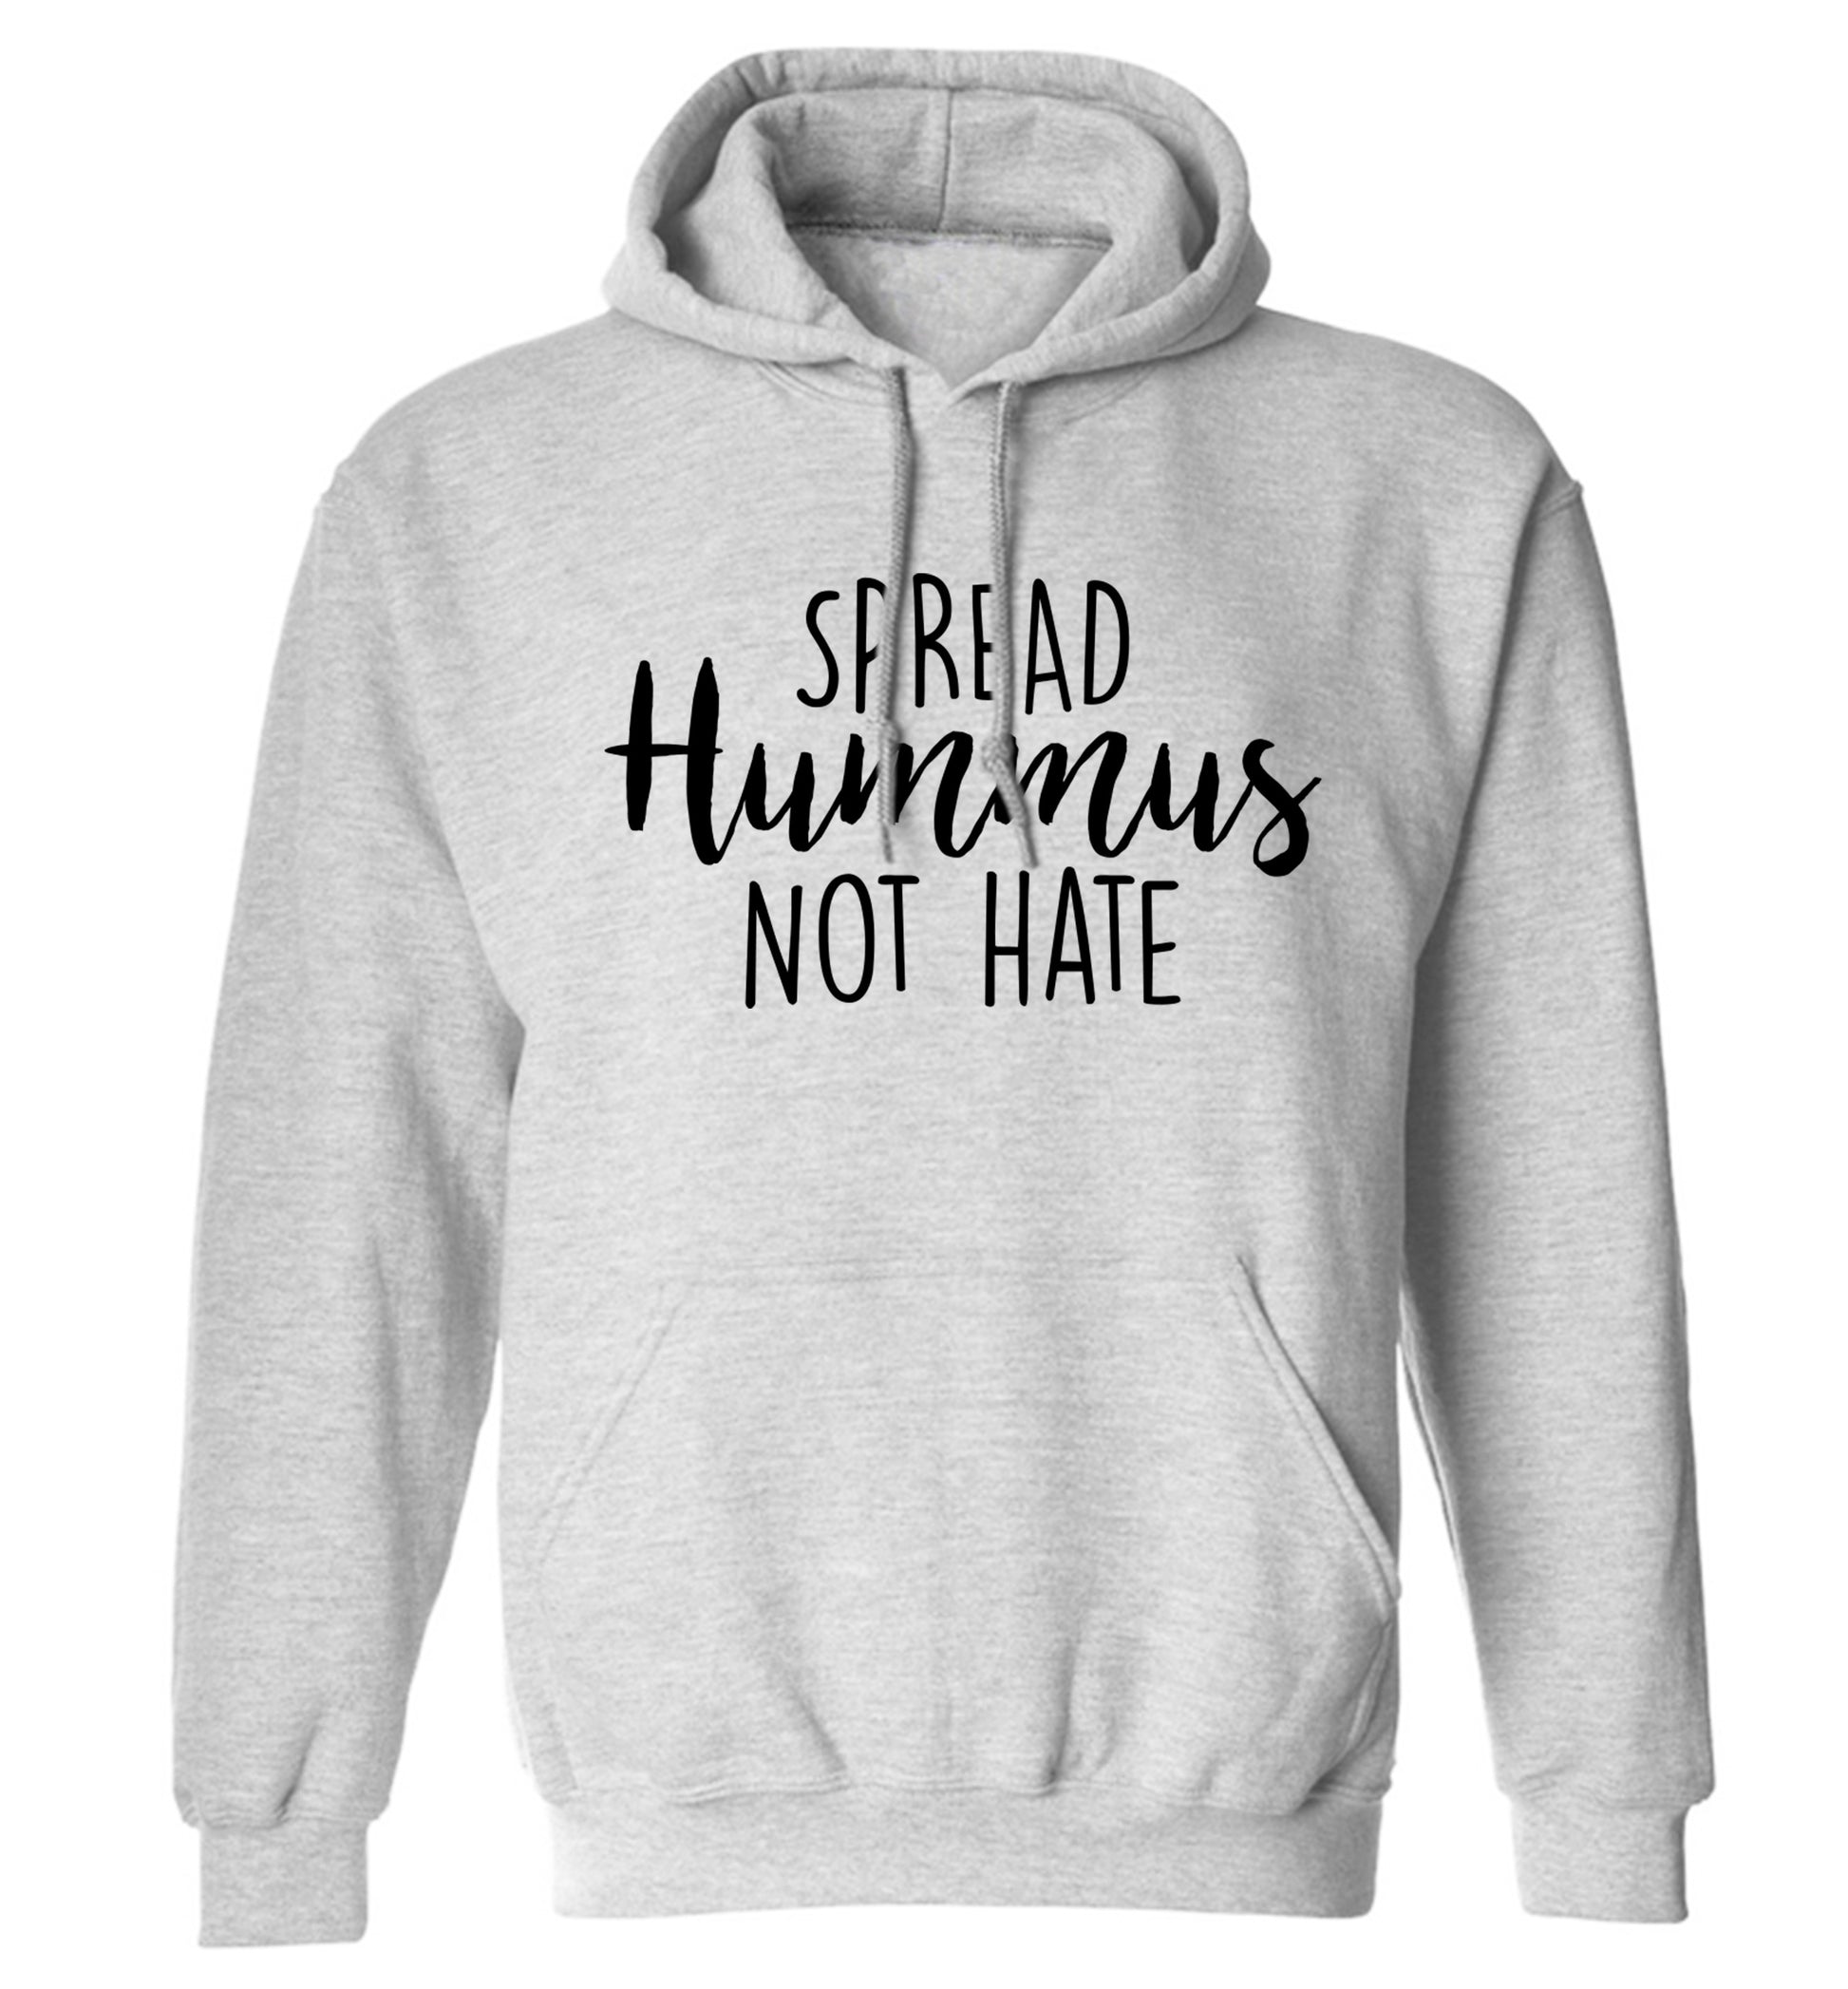 Spread hummus not hate script text adults unisex grey hoodie 2XL